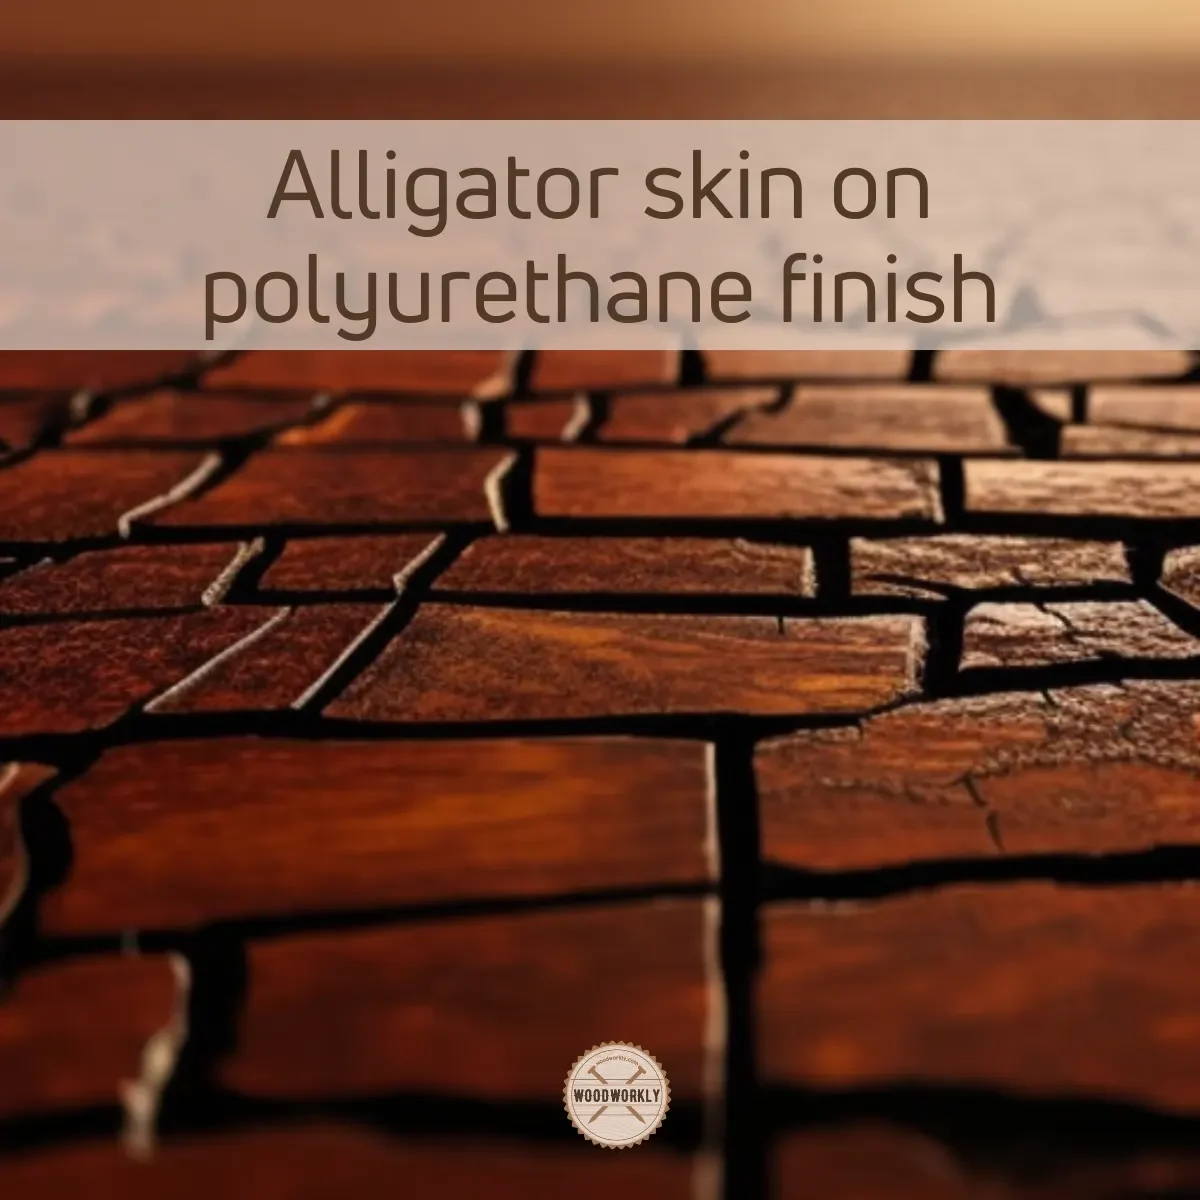 Alligator skin on polyurethane finish